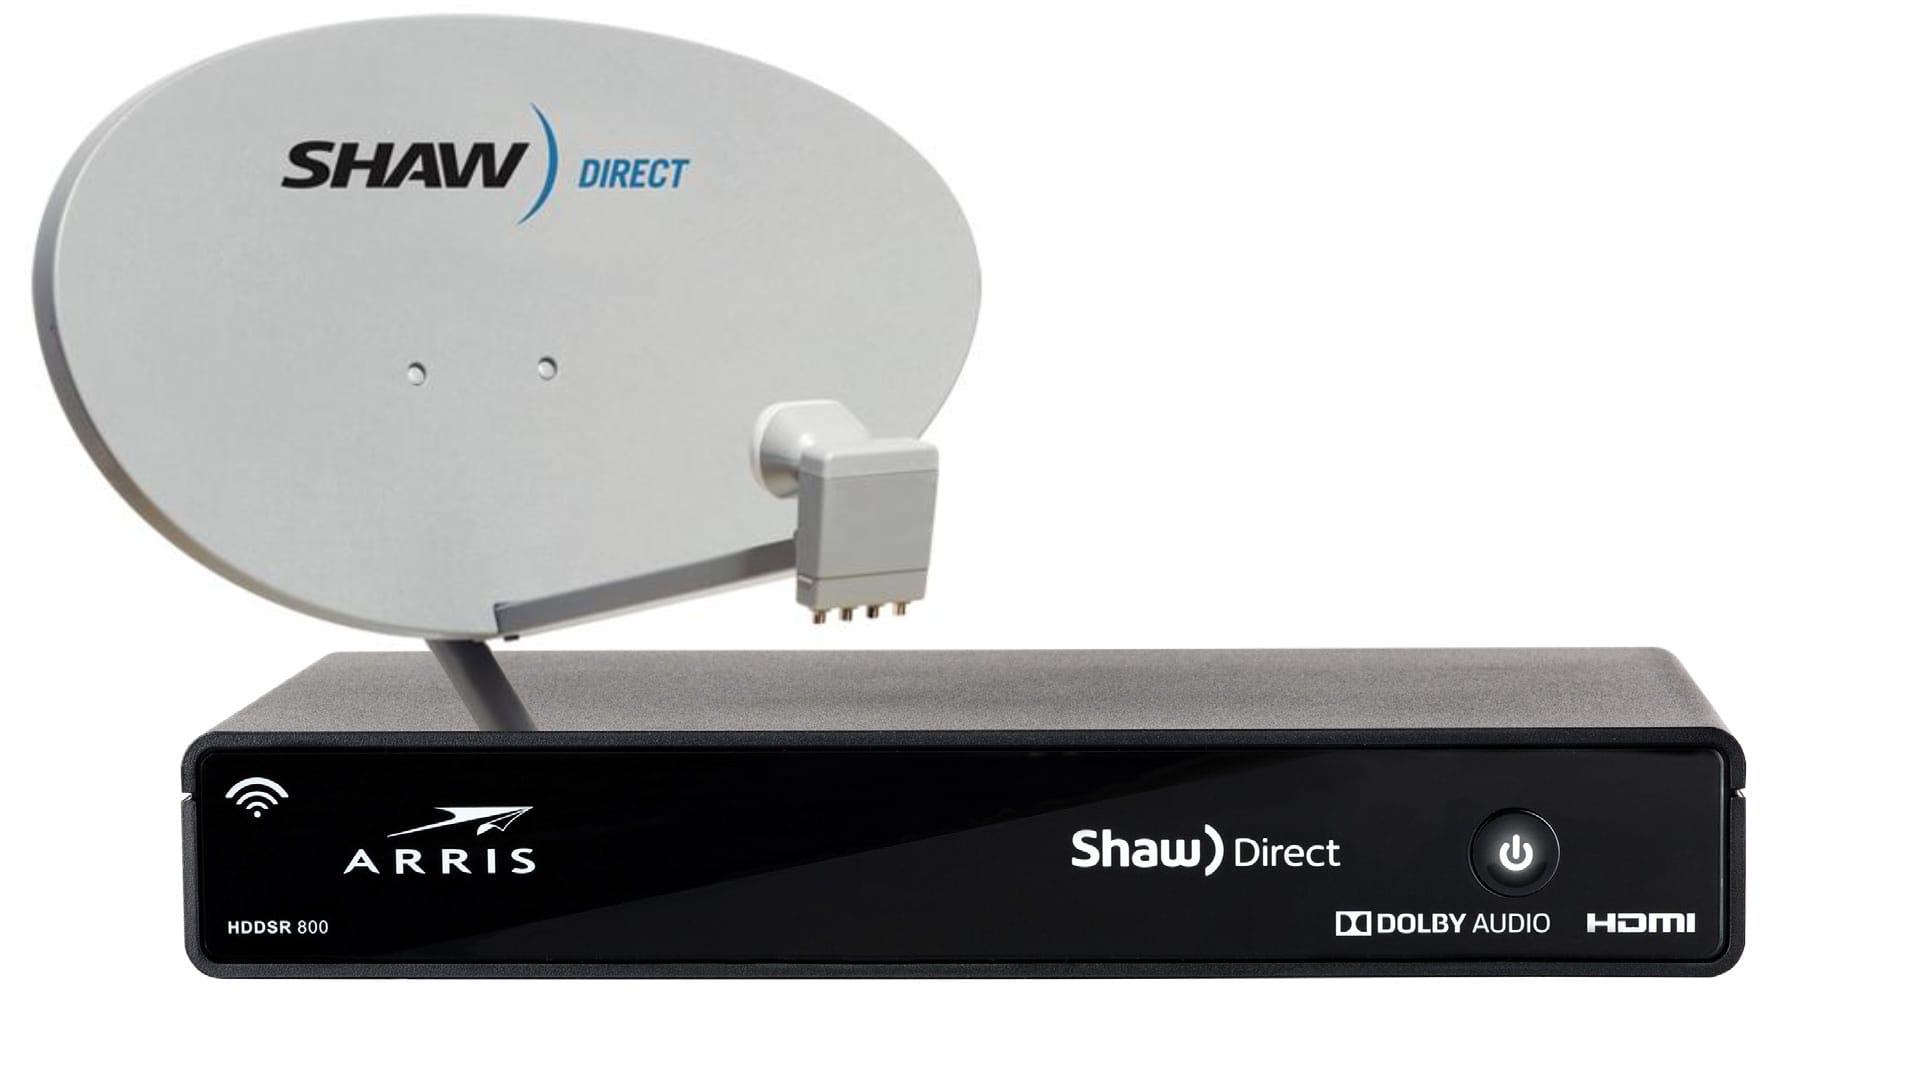 Shaw direct PVR Receiver Bundle